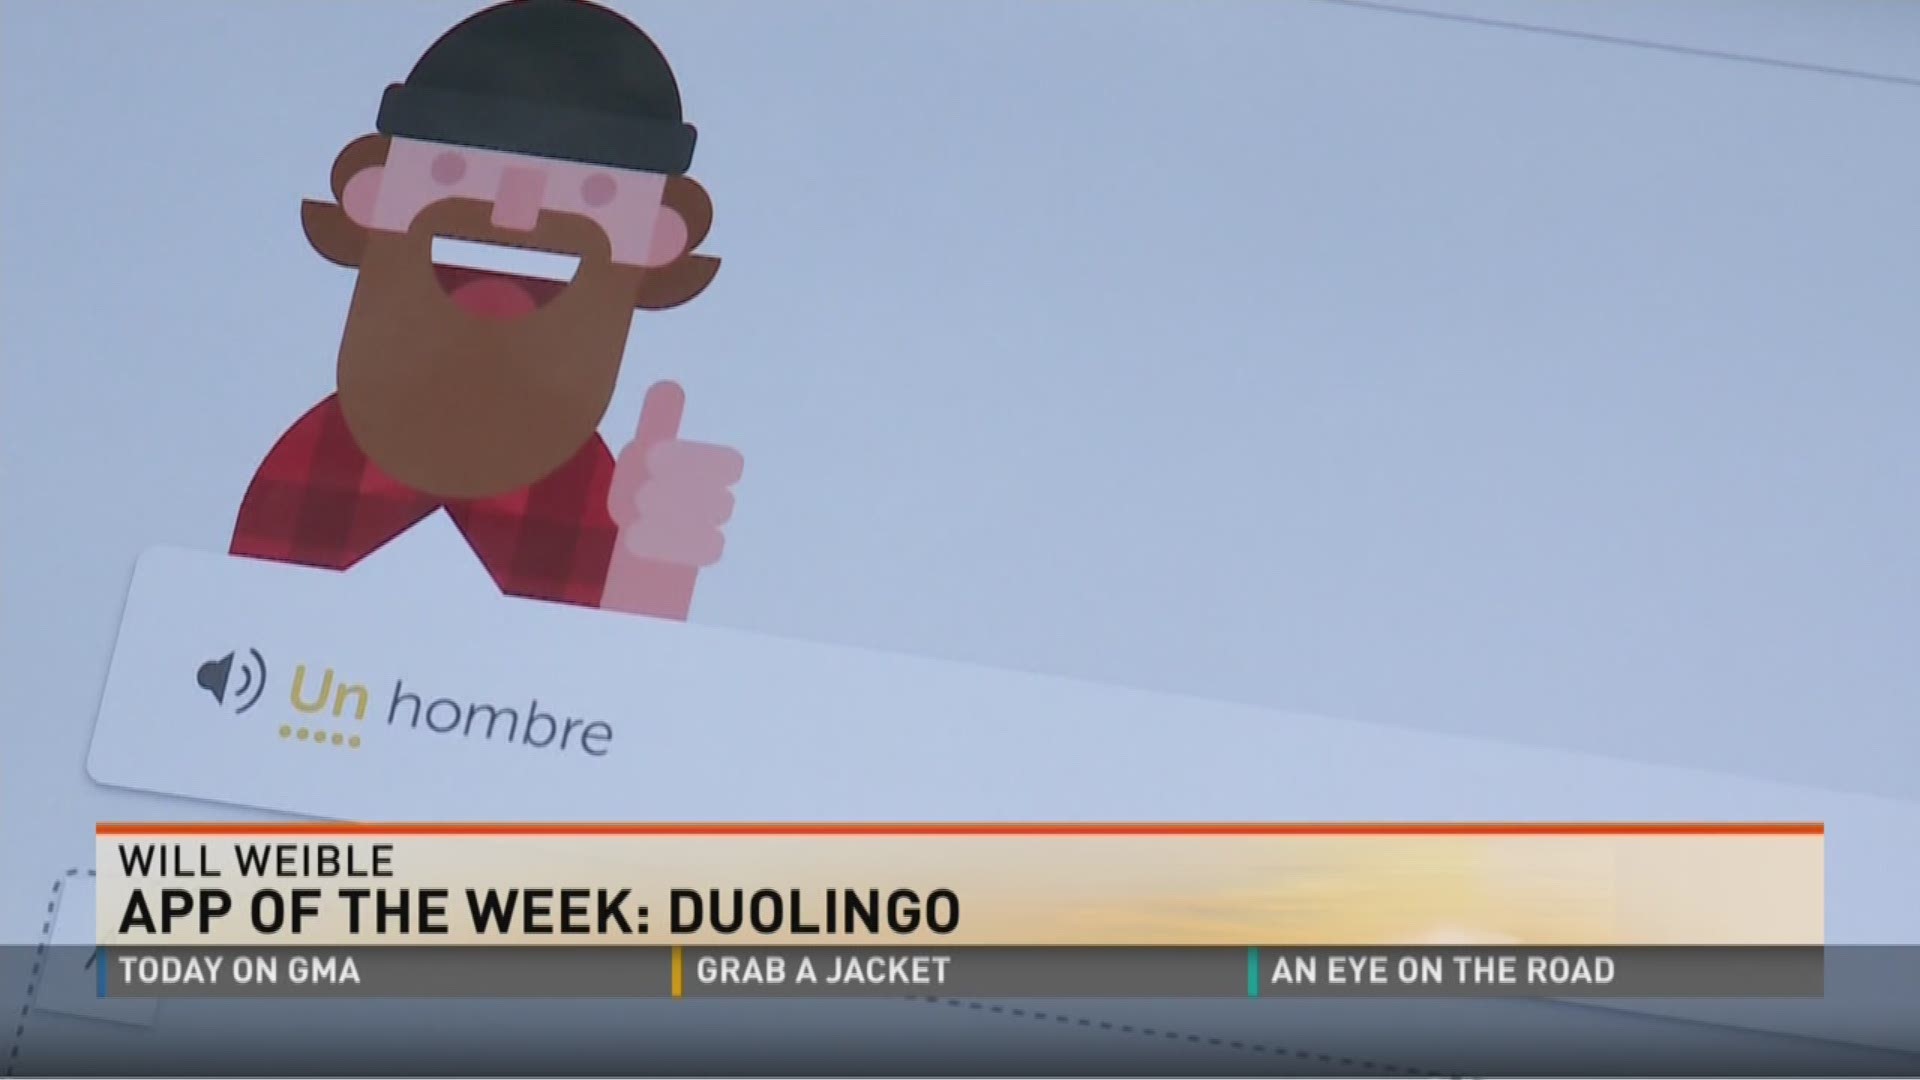 App of the Week: Duolingo